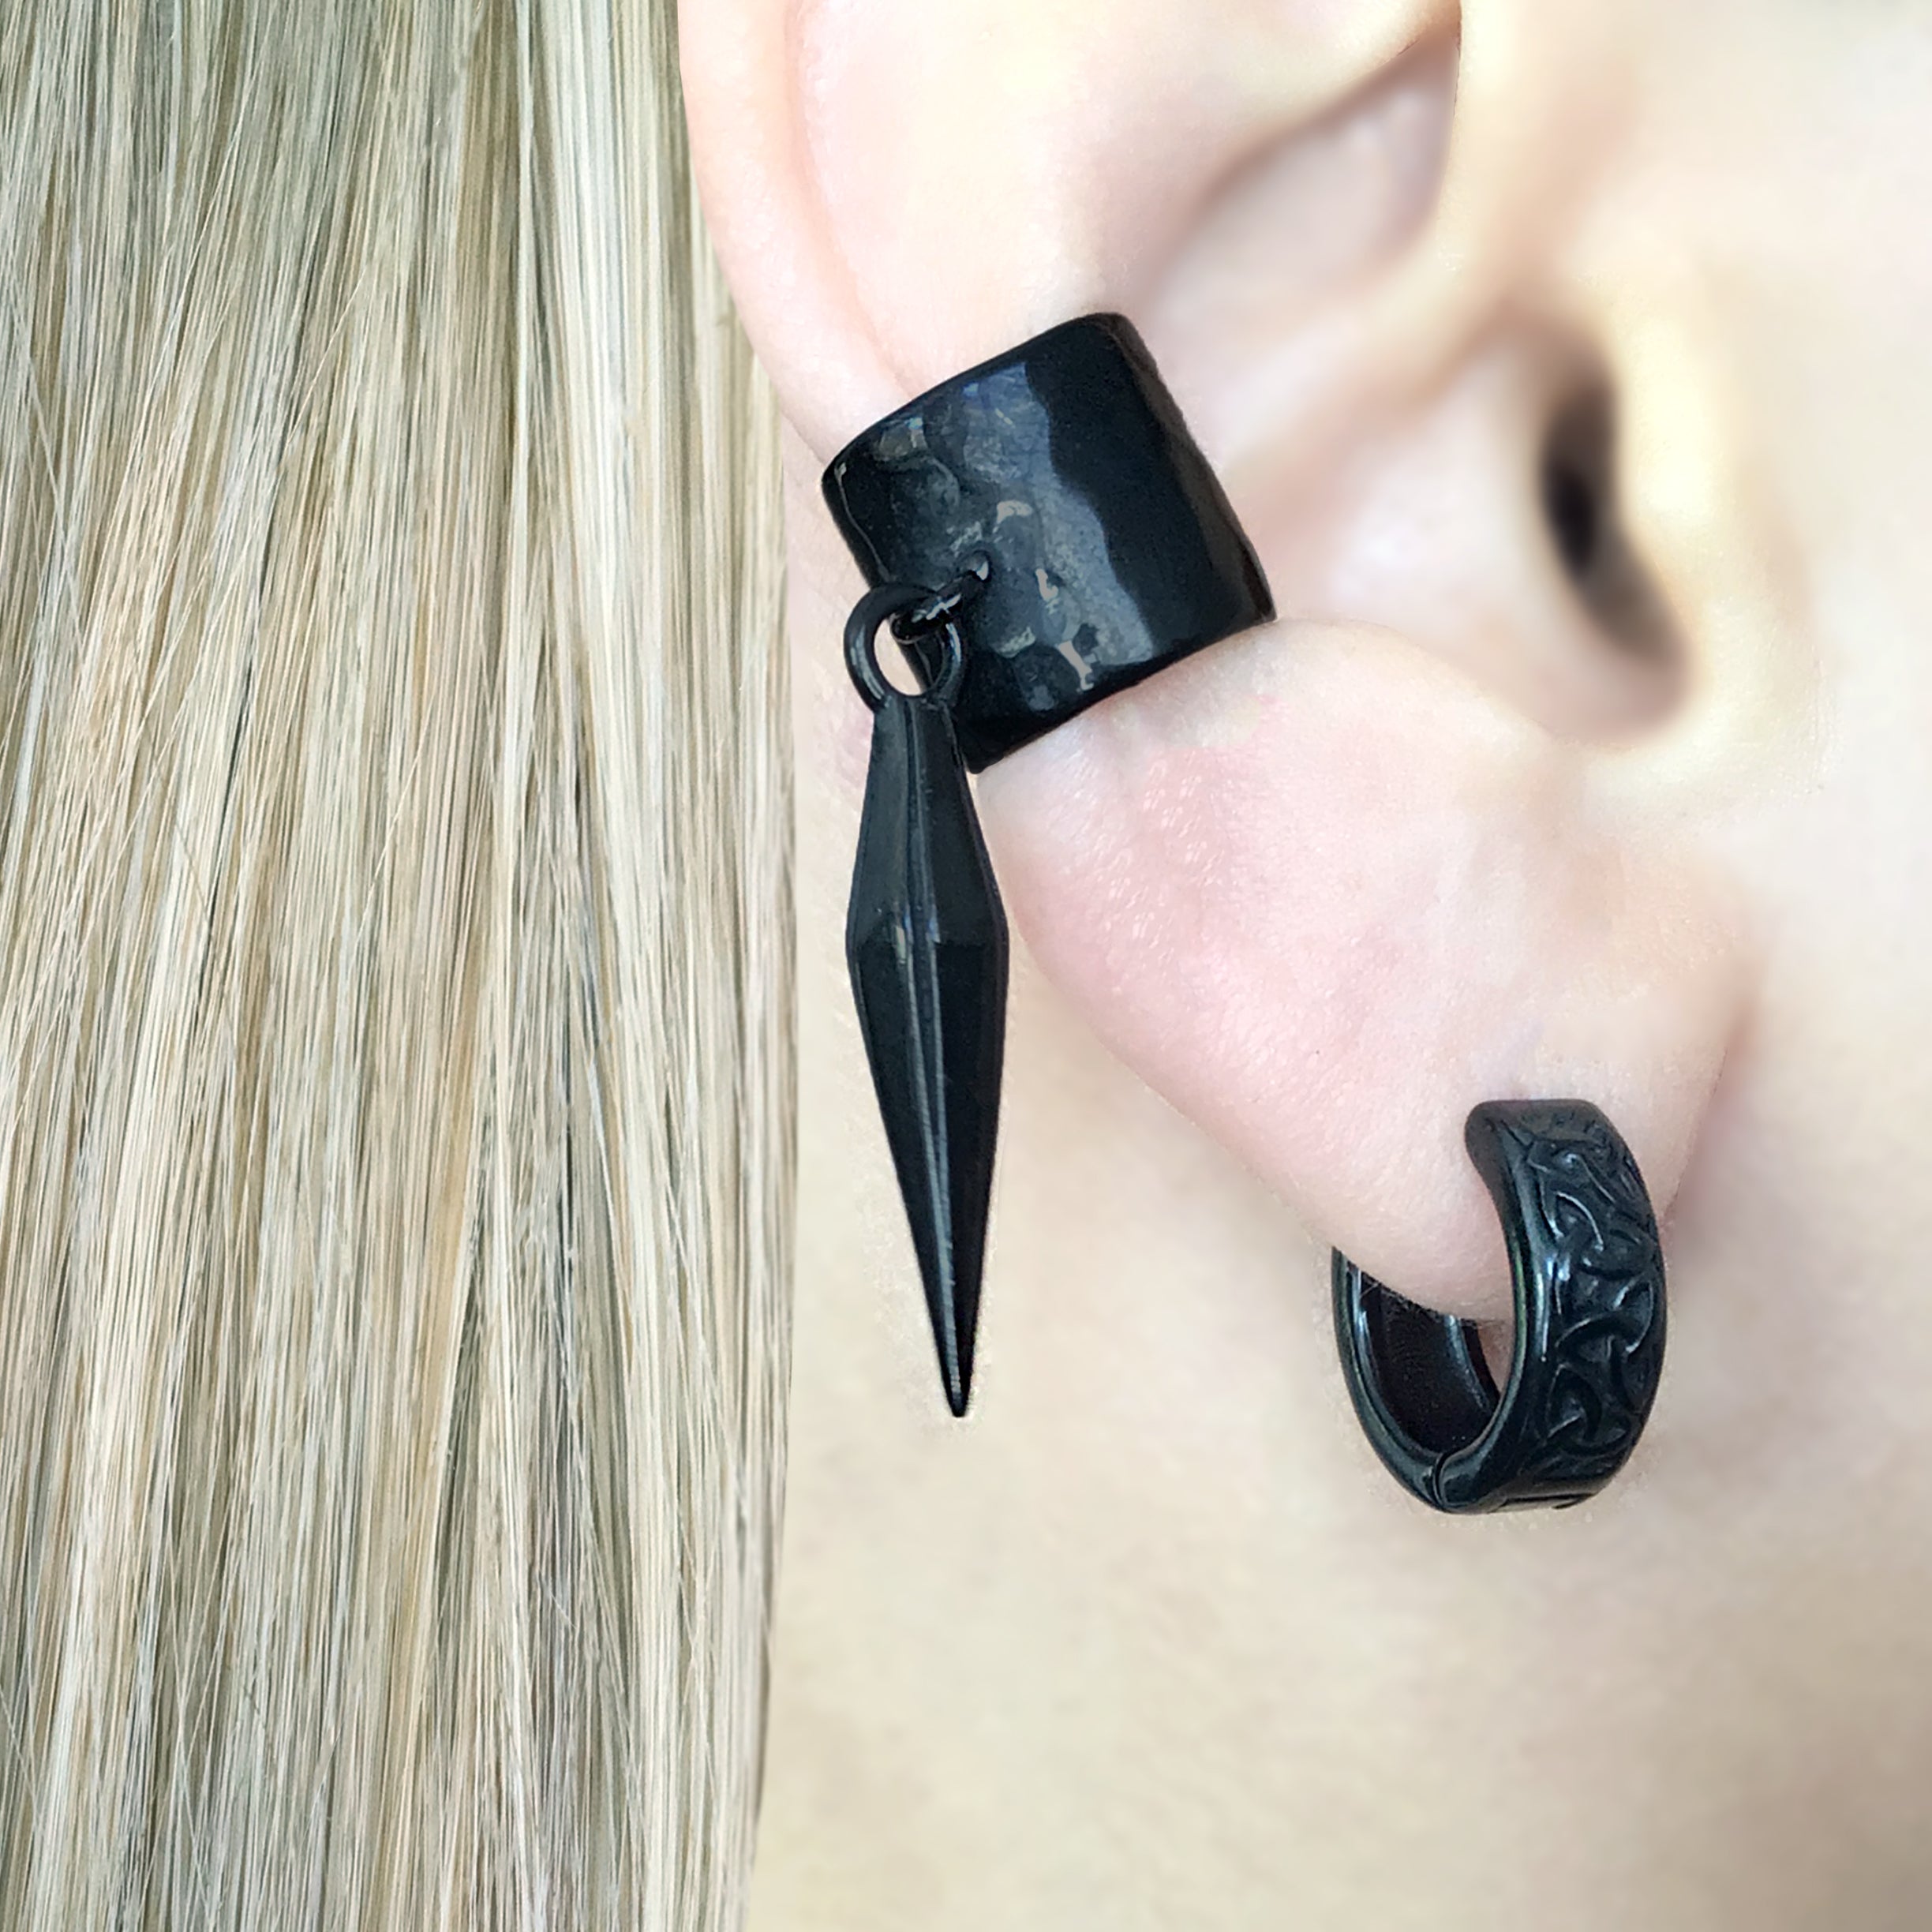 EAR CUFF WITH SPIKE IN BLACK